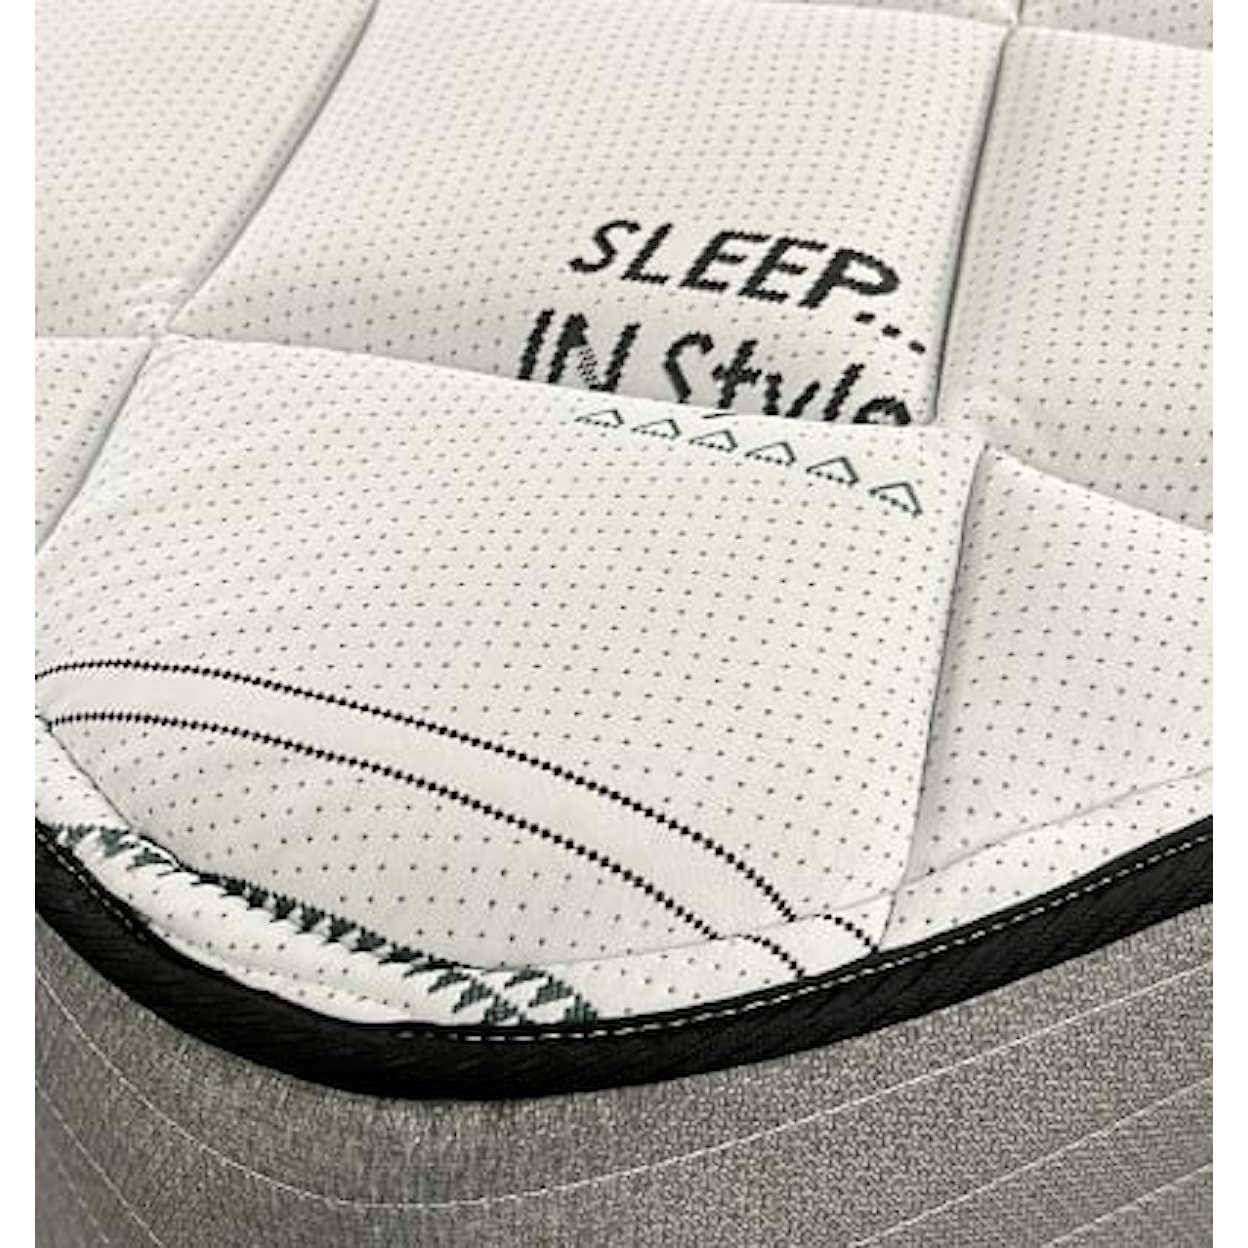 Bowles Mattress Co. Sleep IN Style Centinnial Twin X-Long Mattress